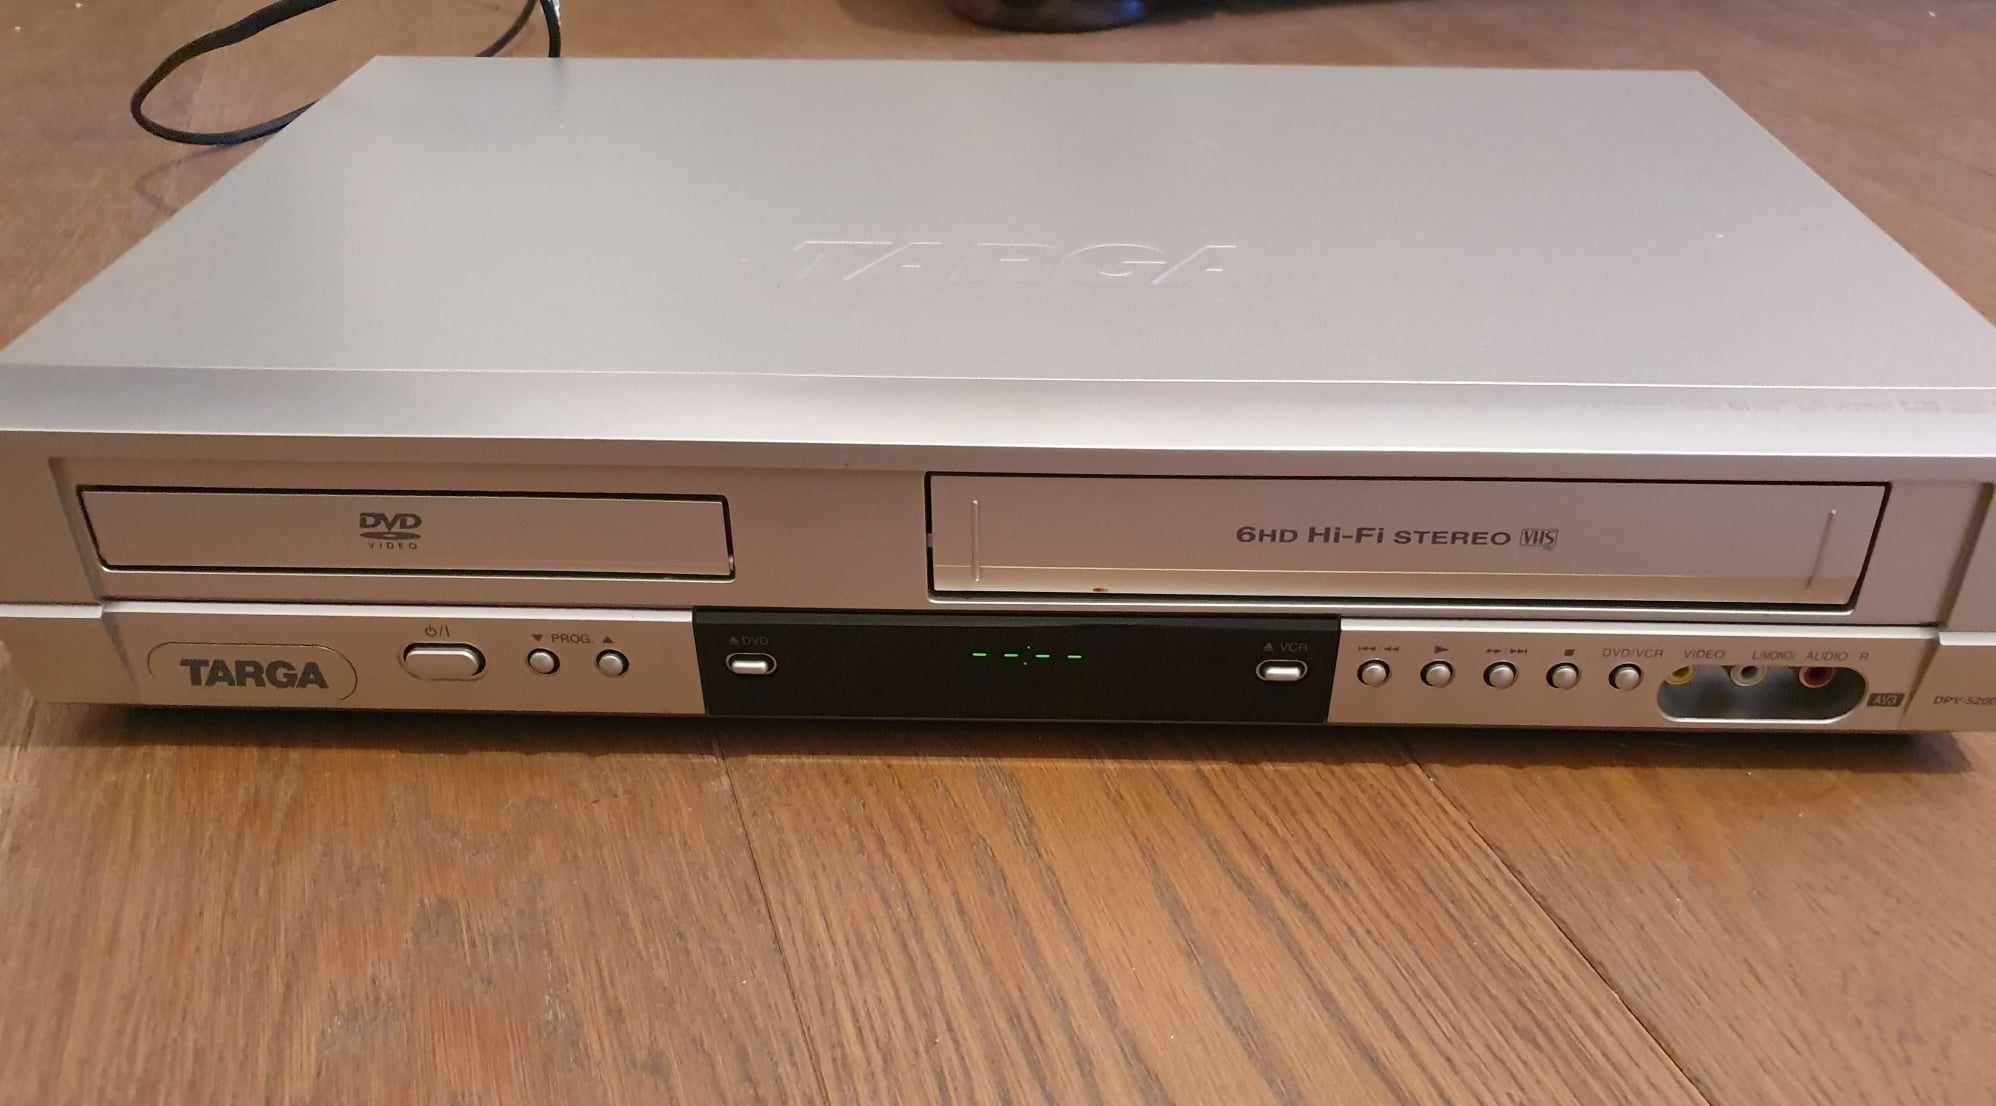 Targa DVP 5200x DVD player VCR combo , argintiu